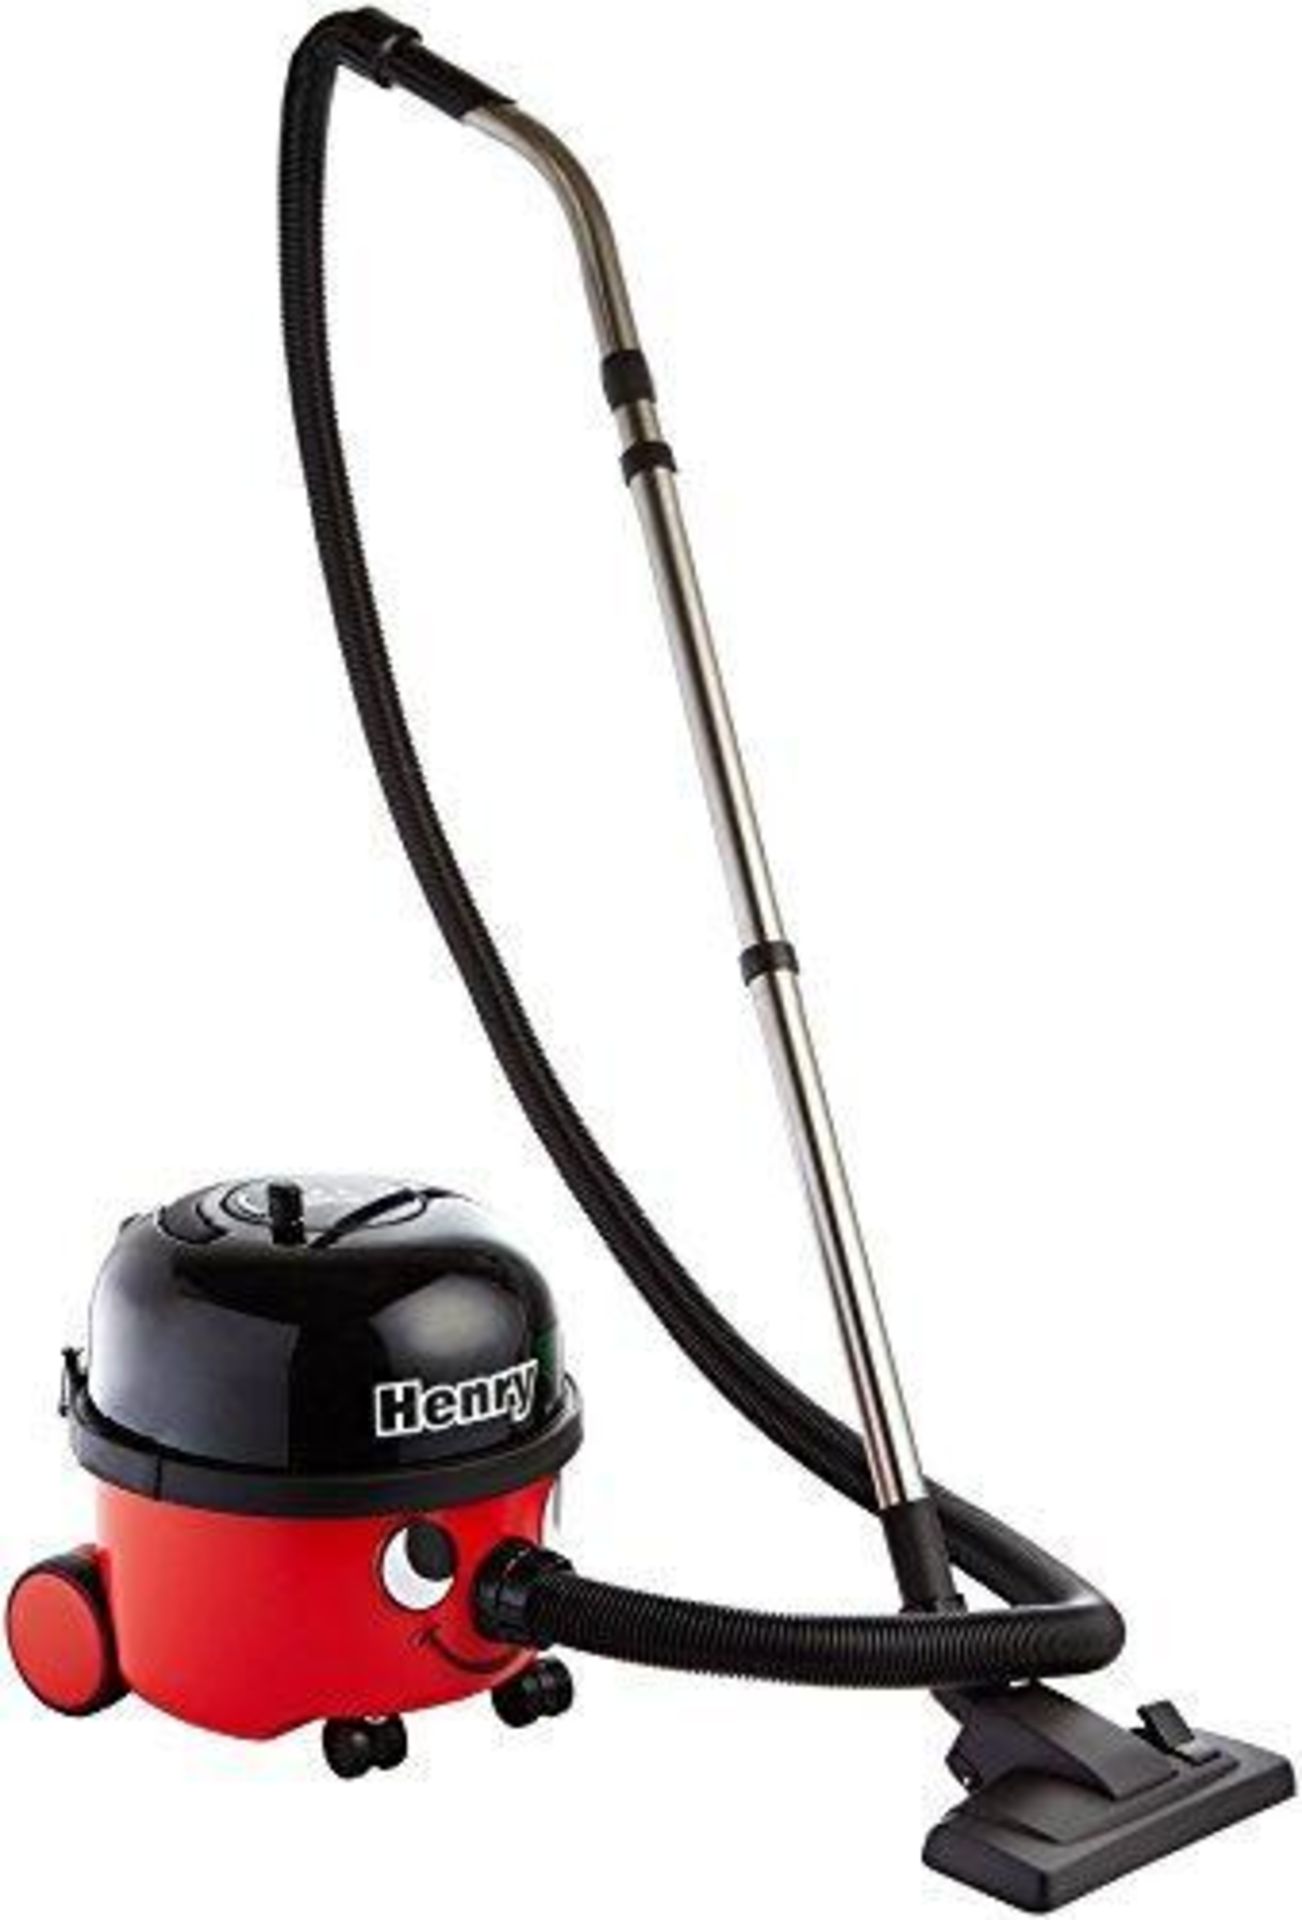 Numatic Henry Vacuum Cleaner Bagged 620 W - Red/Black (Model No. HVR200N) - SR37. Henry Vacuum - Image 2 of 2